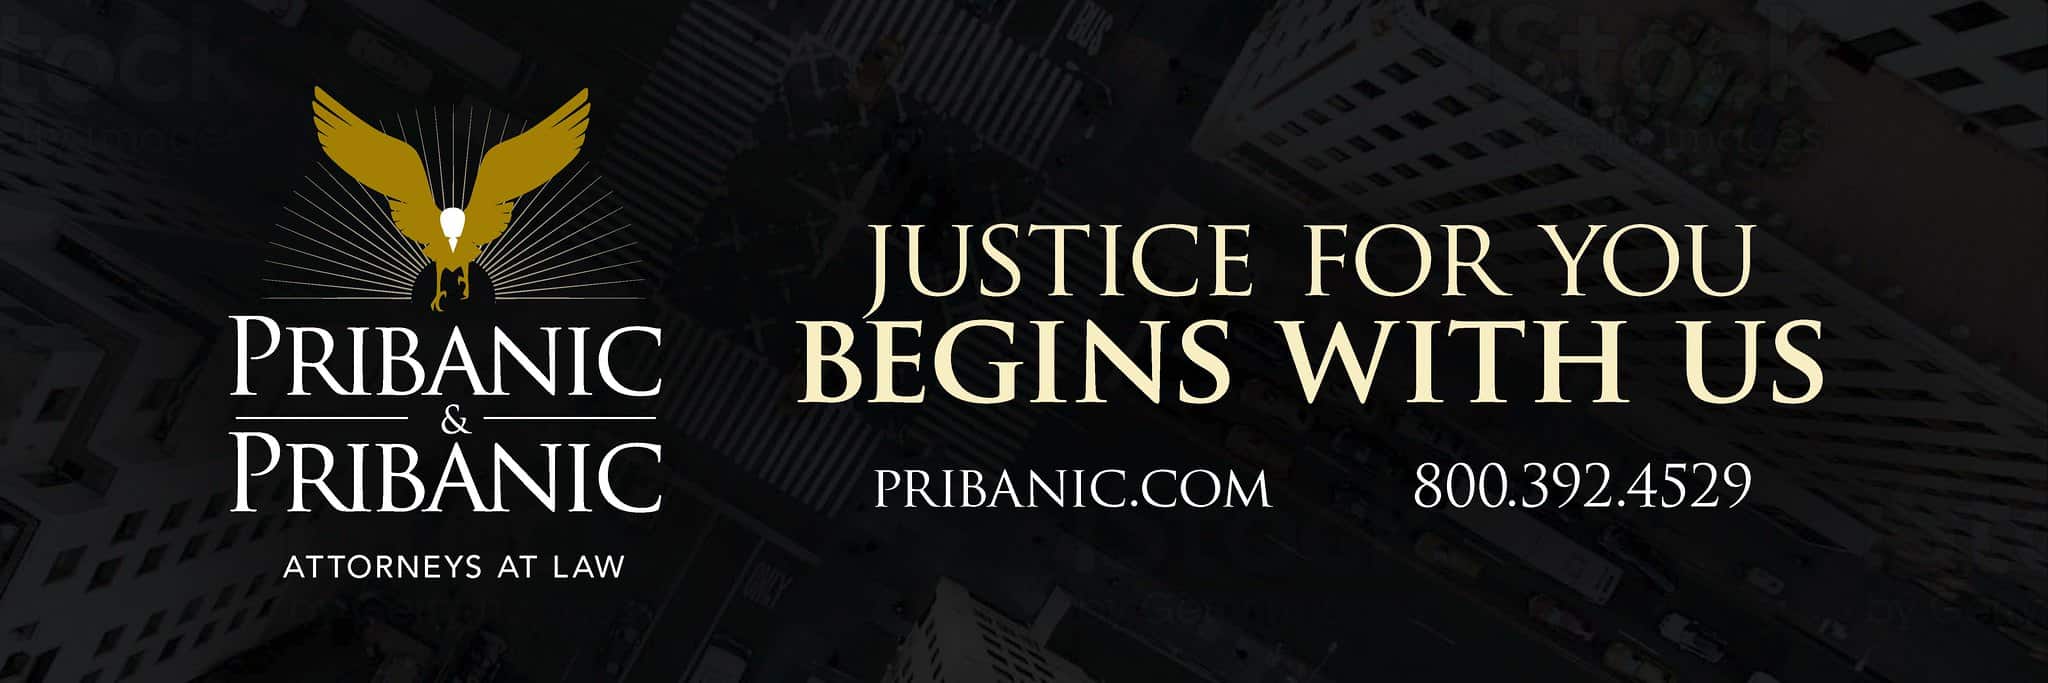 Pribanic & Pribanic Law Firm Story